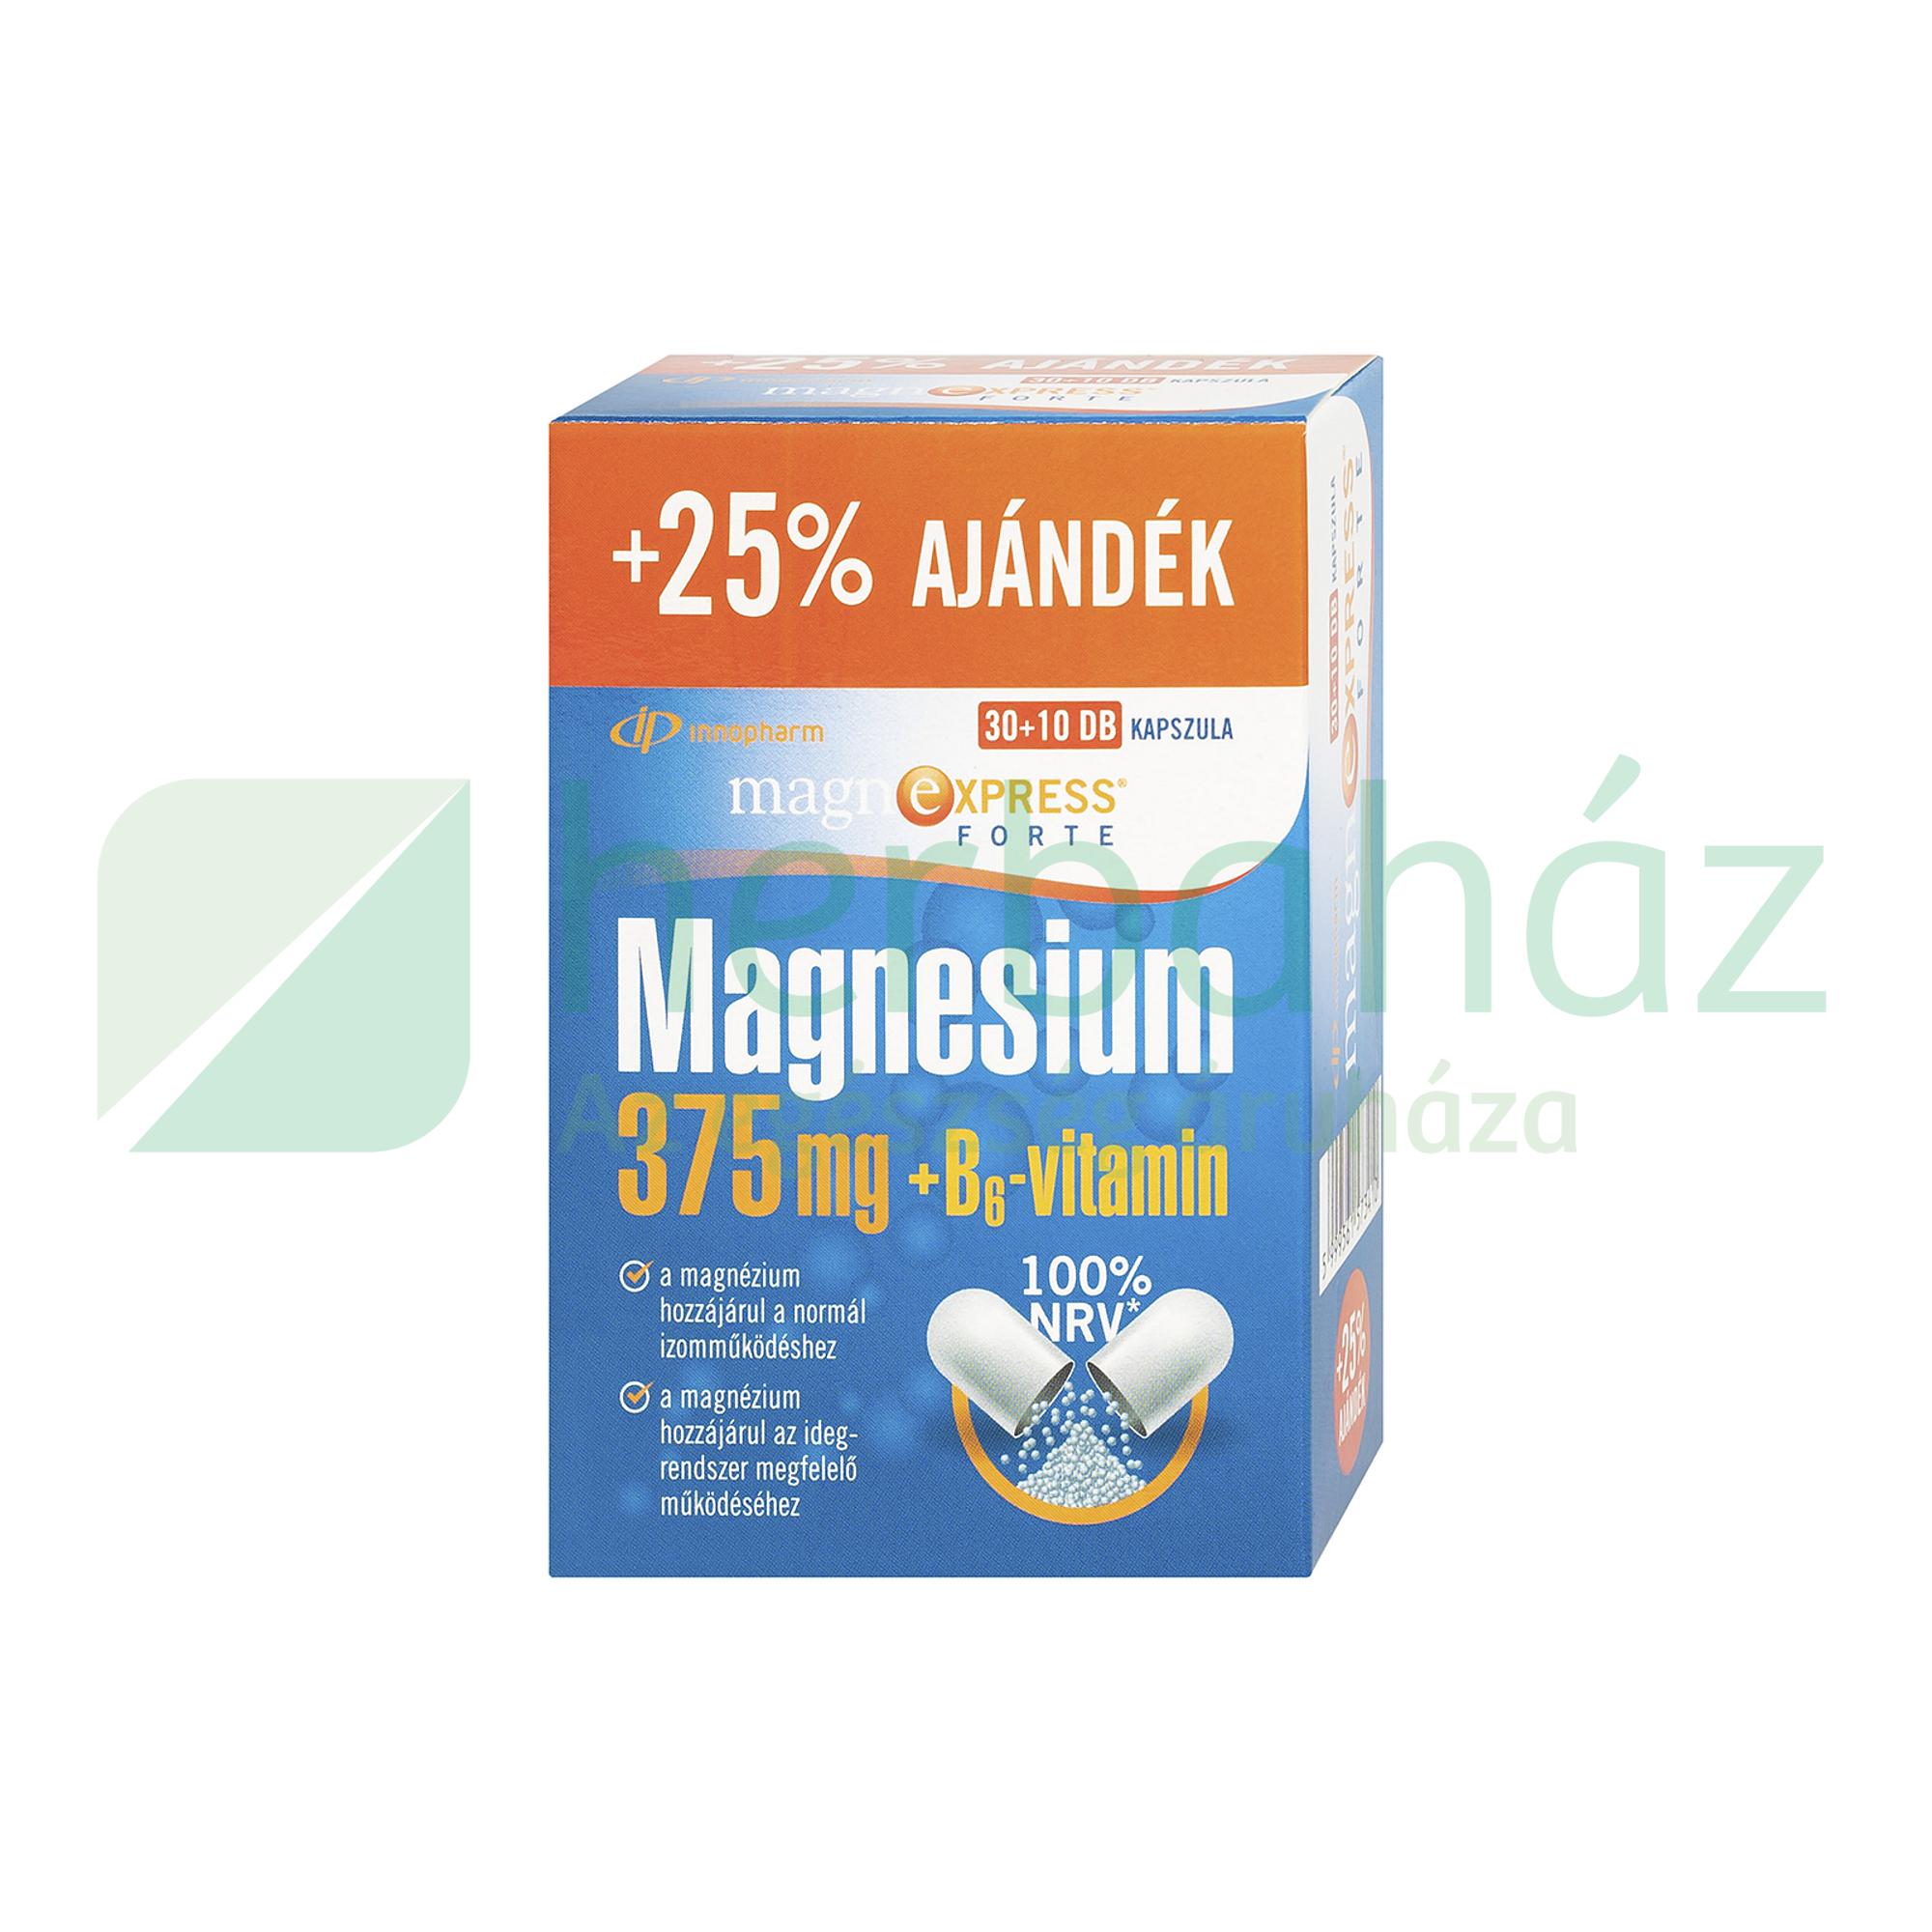 INNOPHARM MAGNEXPRESS FORTE MAGNESIUM 375MG+B6-VITAMIN KAPSZULA 30+10DB